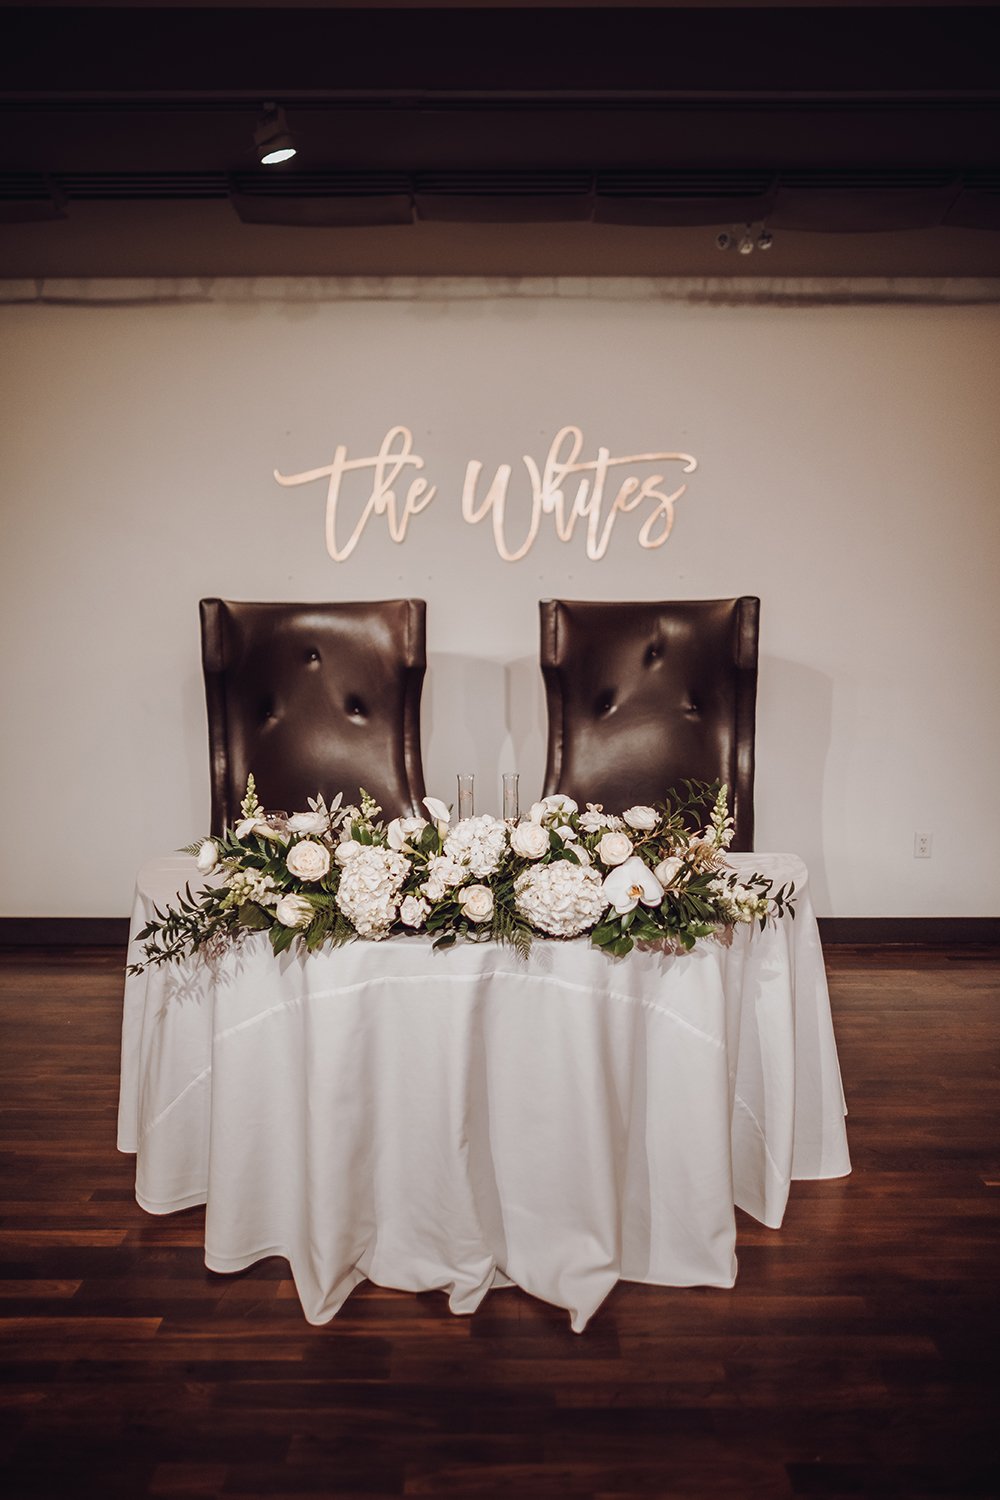 his her table - wedding reception decor